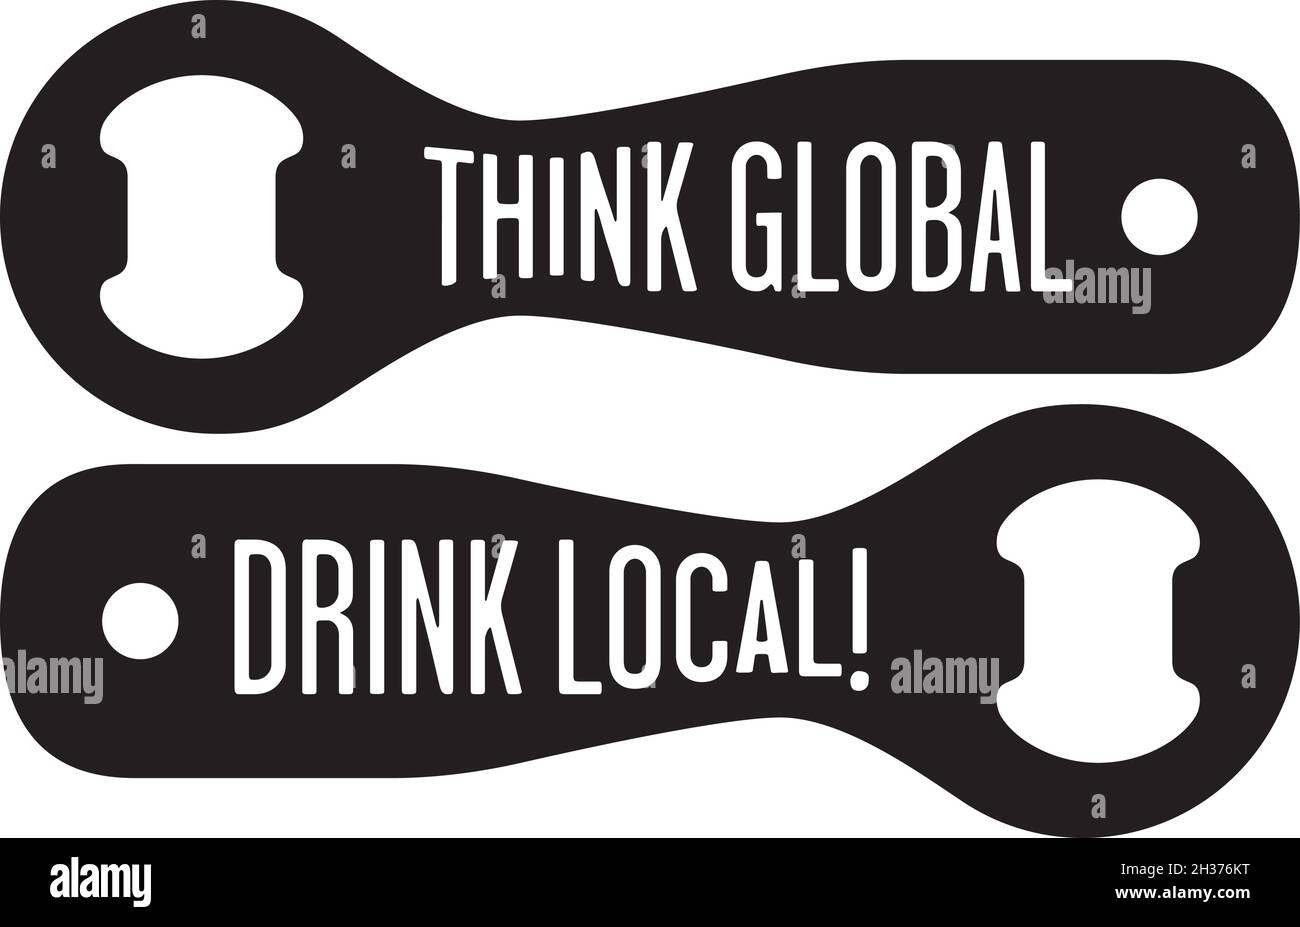 Think Global, Drink Local Craft Beer Design Vector illustration of beer bottle openers for craft beer promotion or labels. Stock Vector